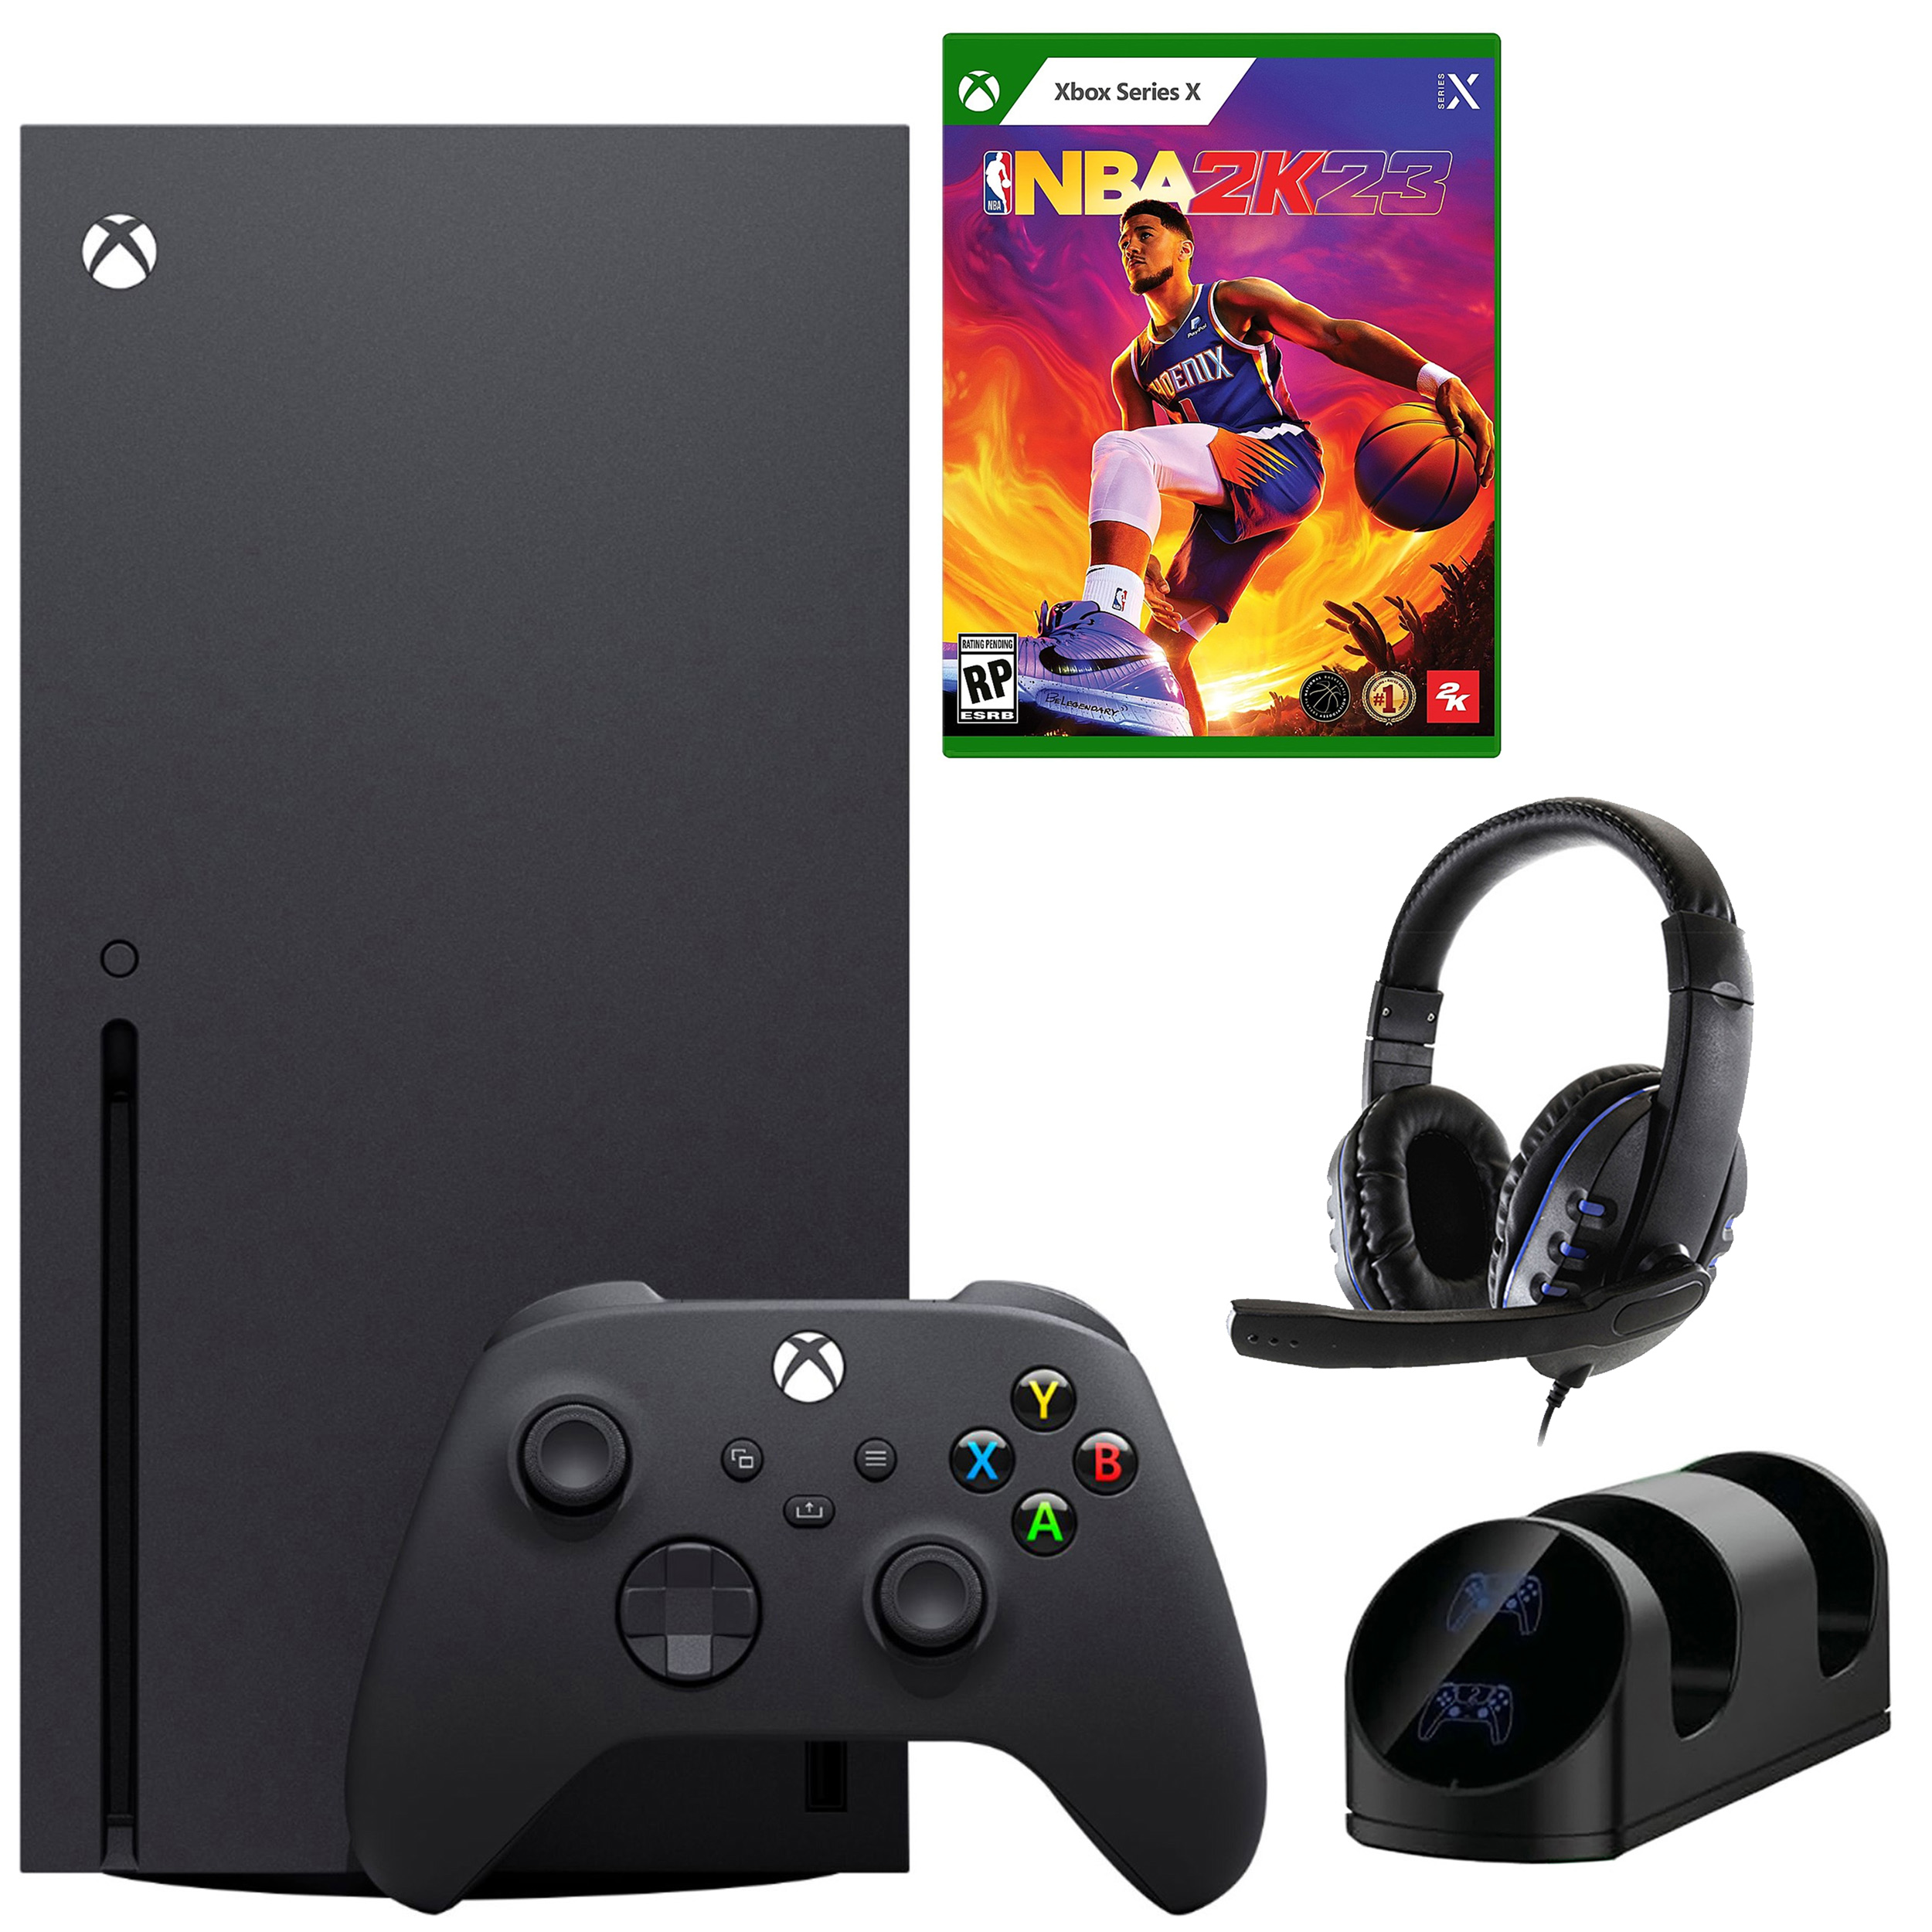 Microsoft Xbox Series X 1TB Console with NBA 2K23 & Accessories